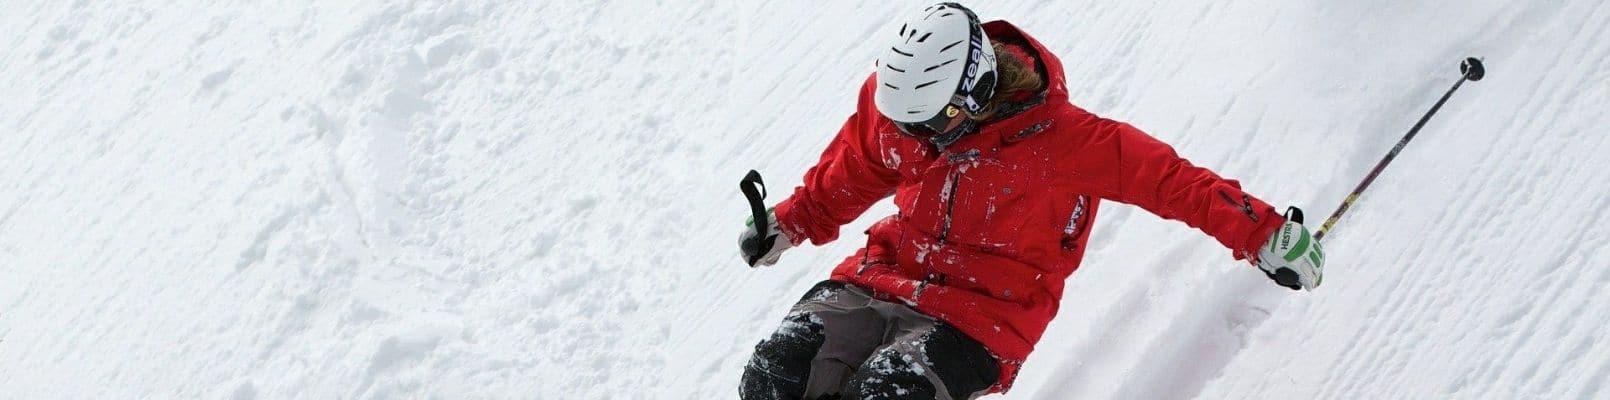 calendar sportiv 2021 ski